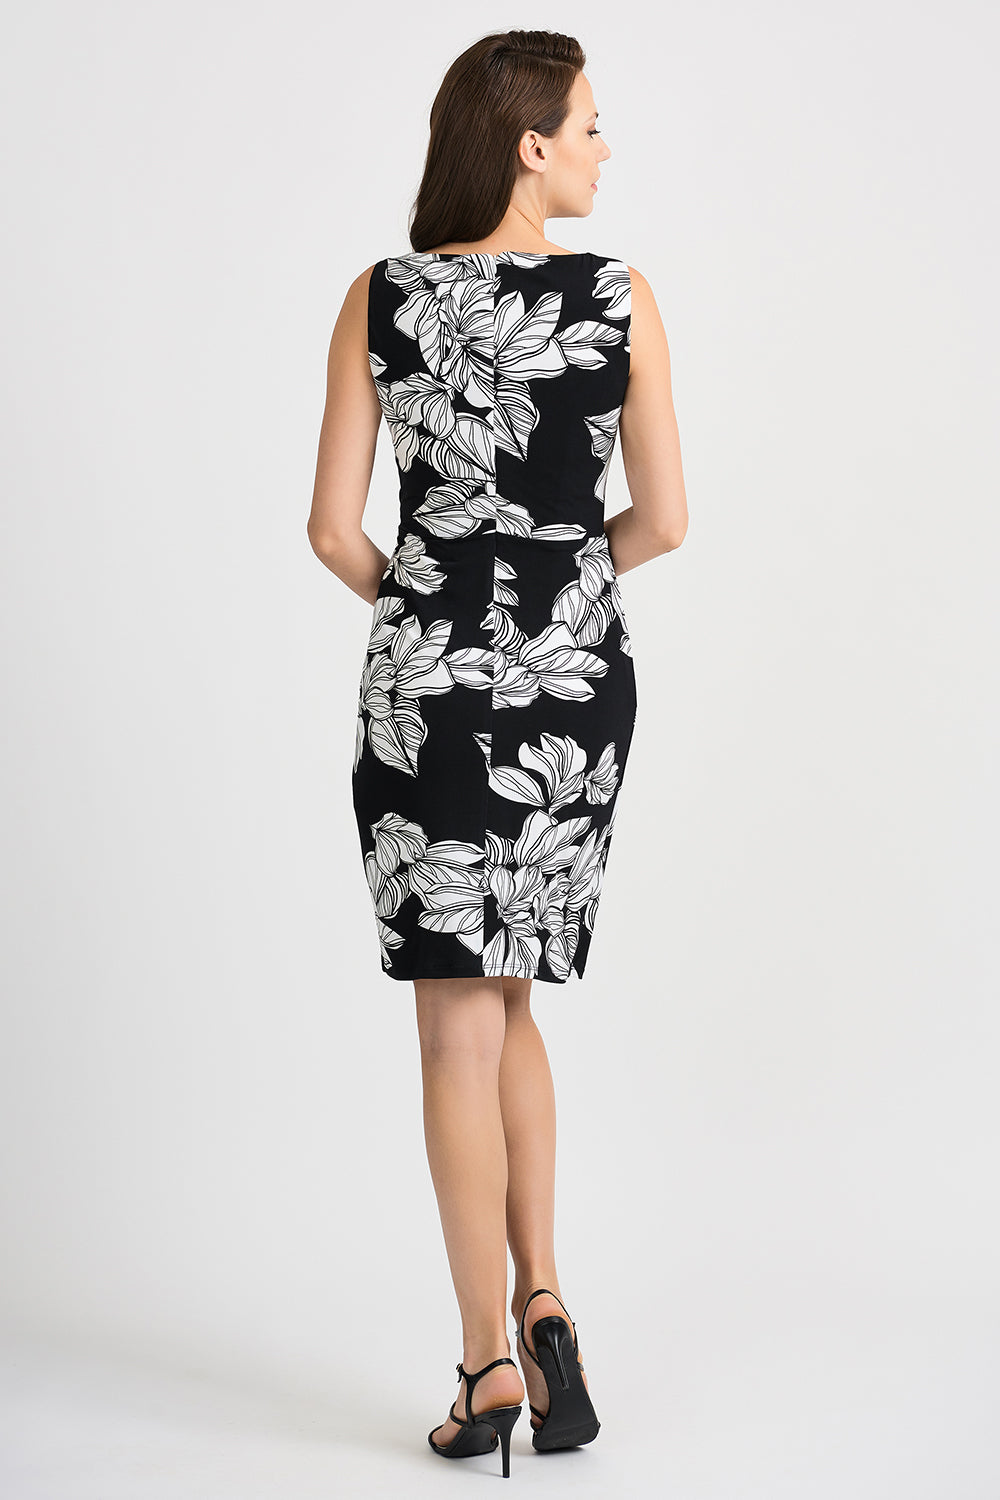 Joseph Ribkoff Black-White Dress Style 201519